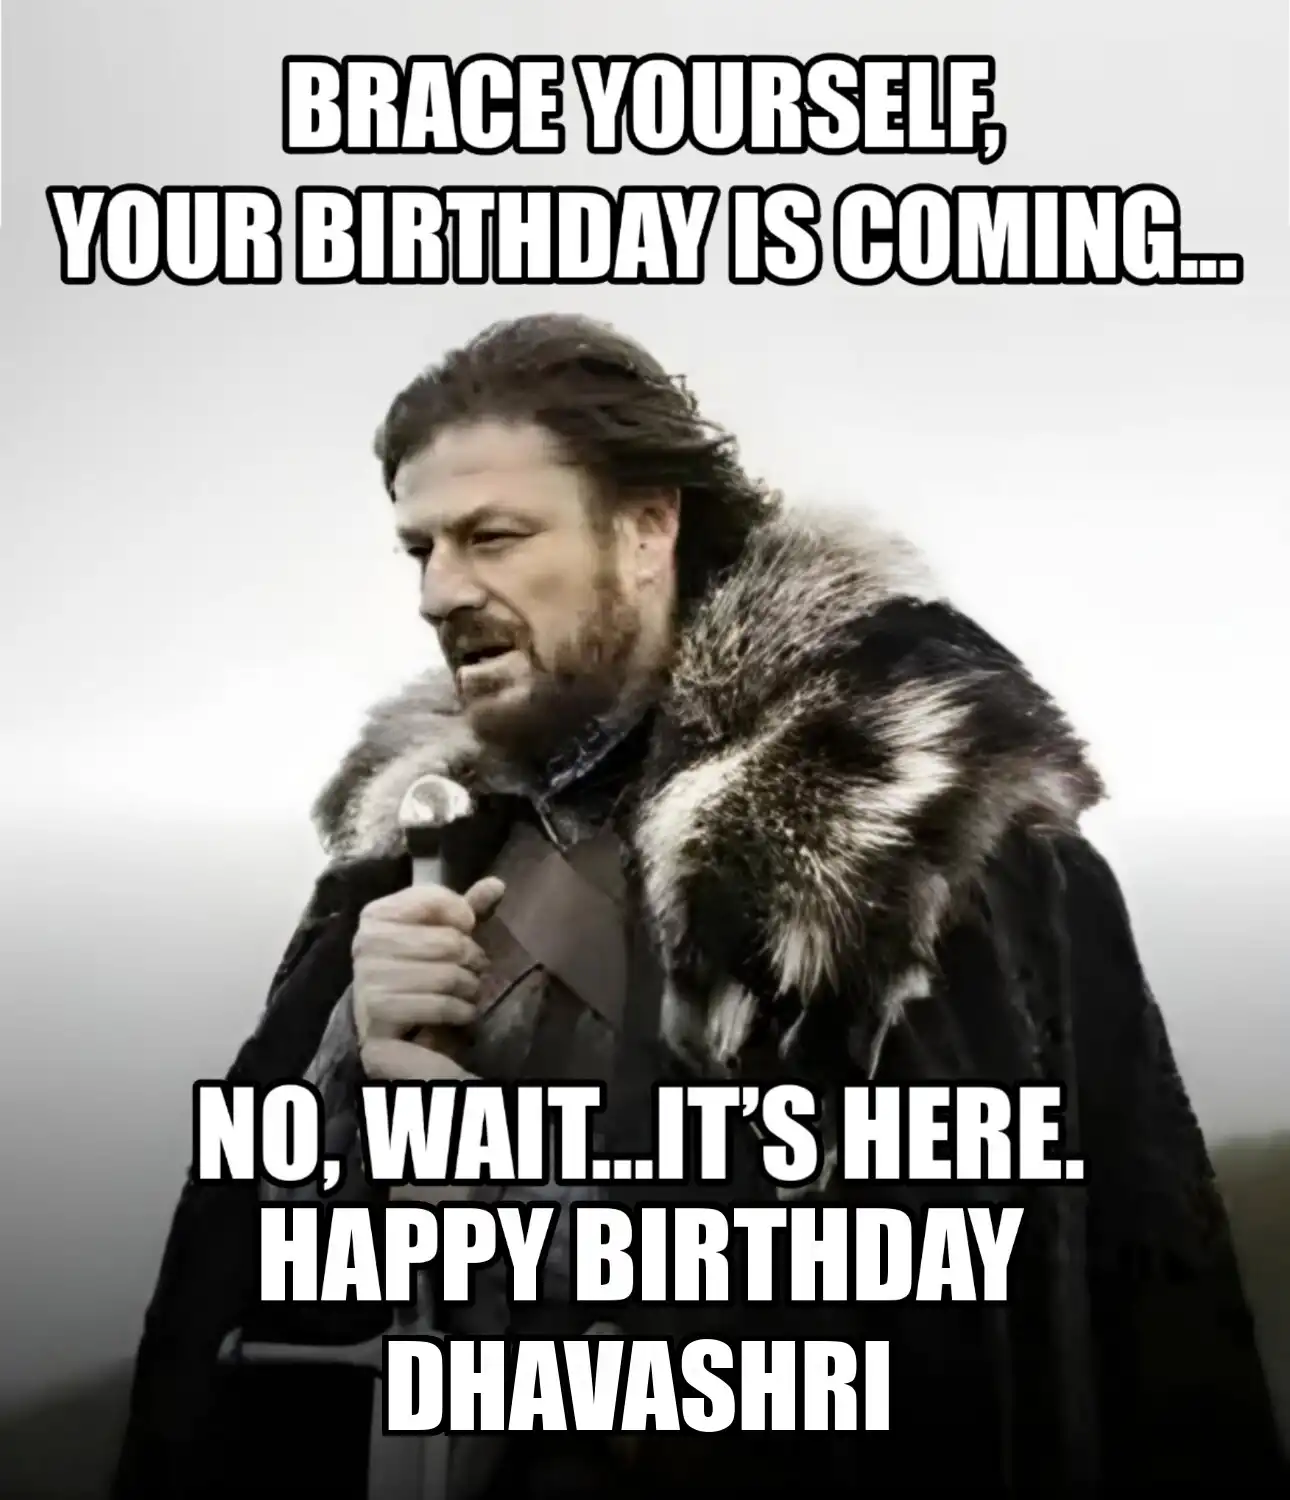 Happy Birthday Dhavashri Brace Yourself Your Birthday Is Coming Meme